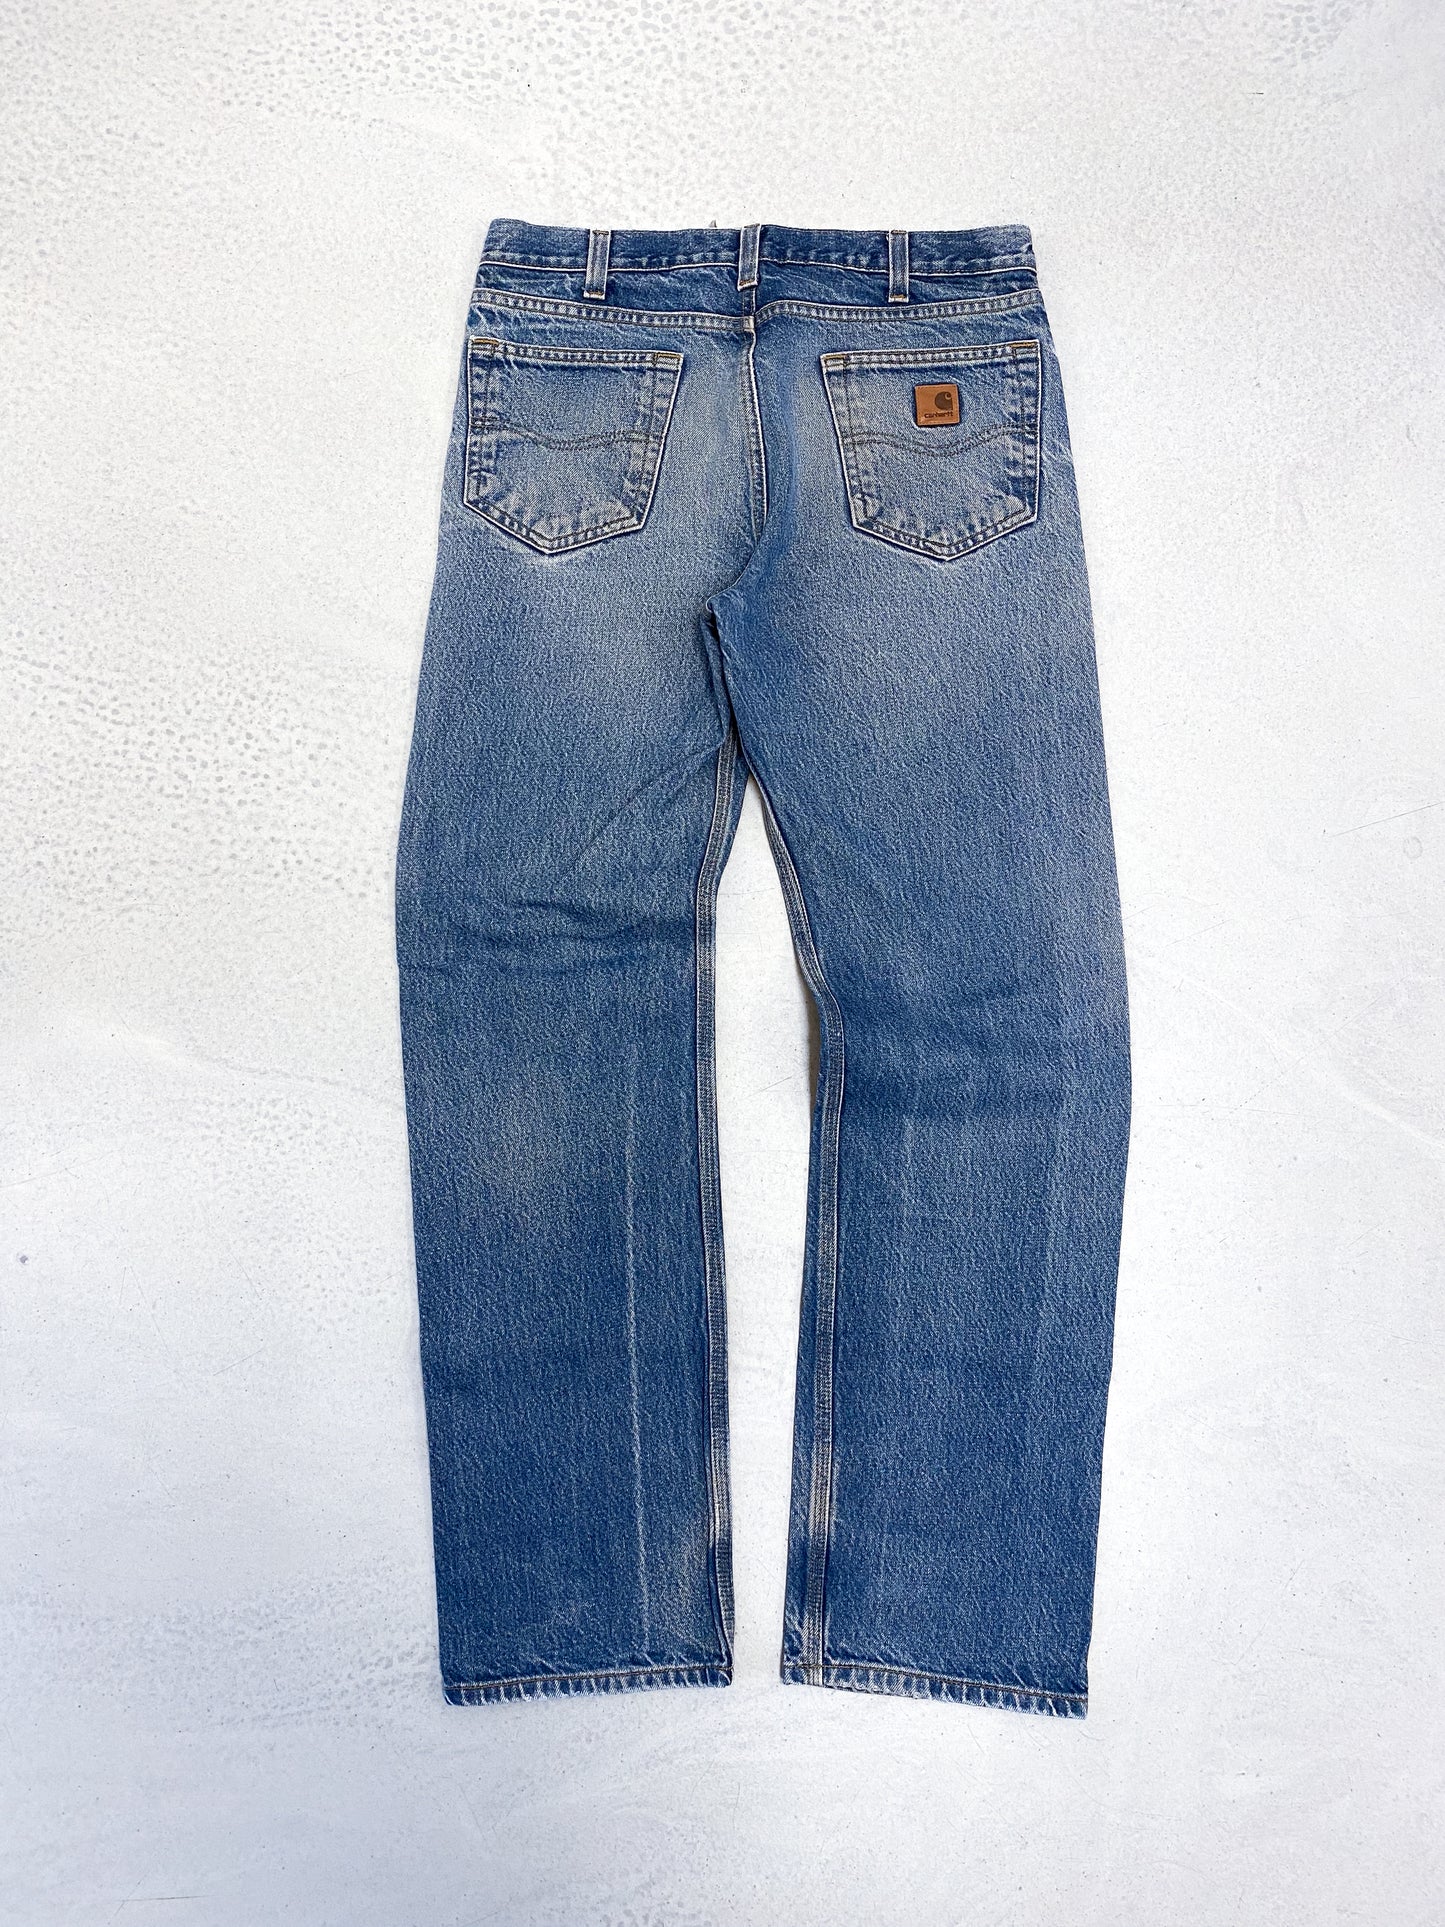 Carhartt bukser (34x32)